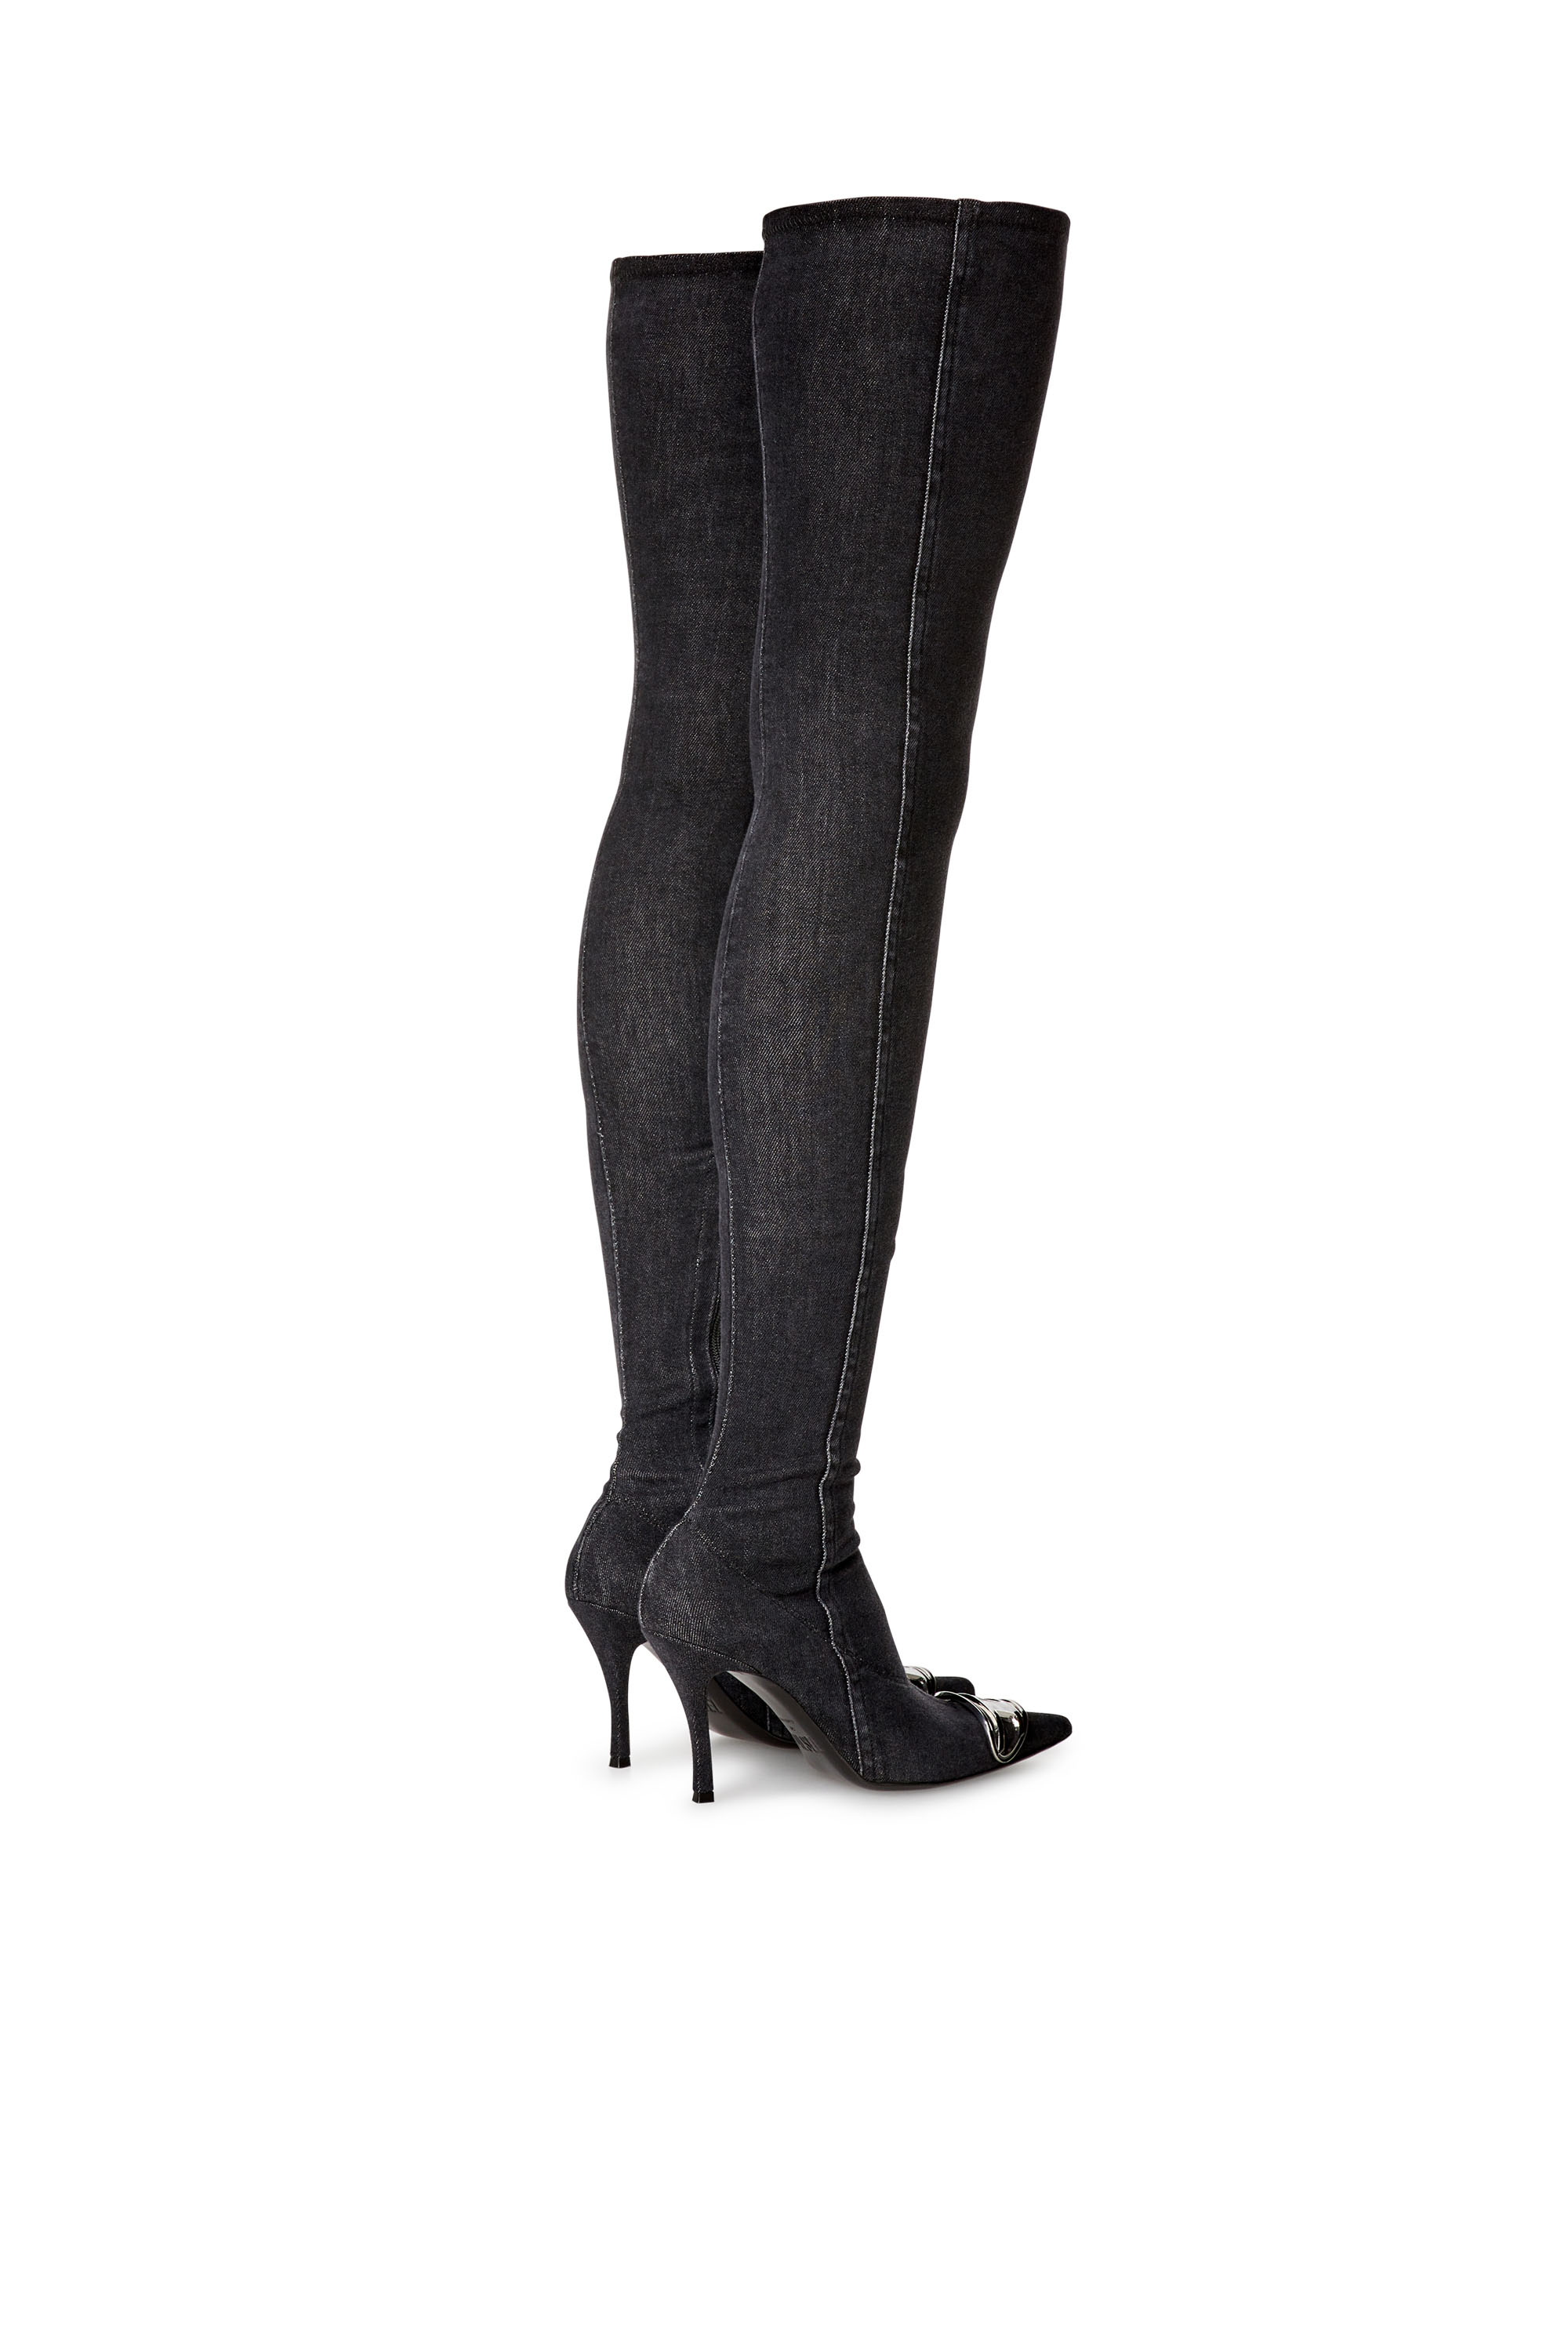 Diesel - D-VENUS TBT D, Woman D-Venus Tbt D Boots - Over-the-knee boots in stretch denim in Black - Image 3